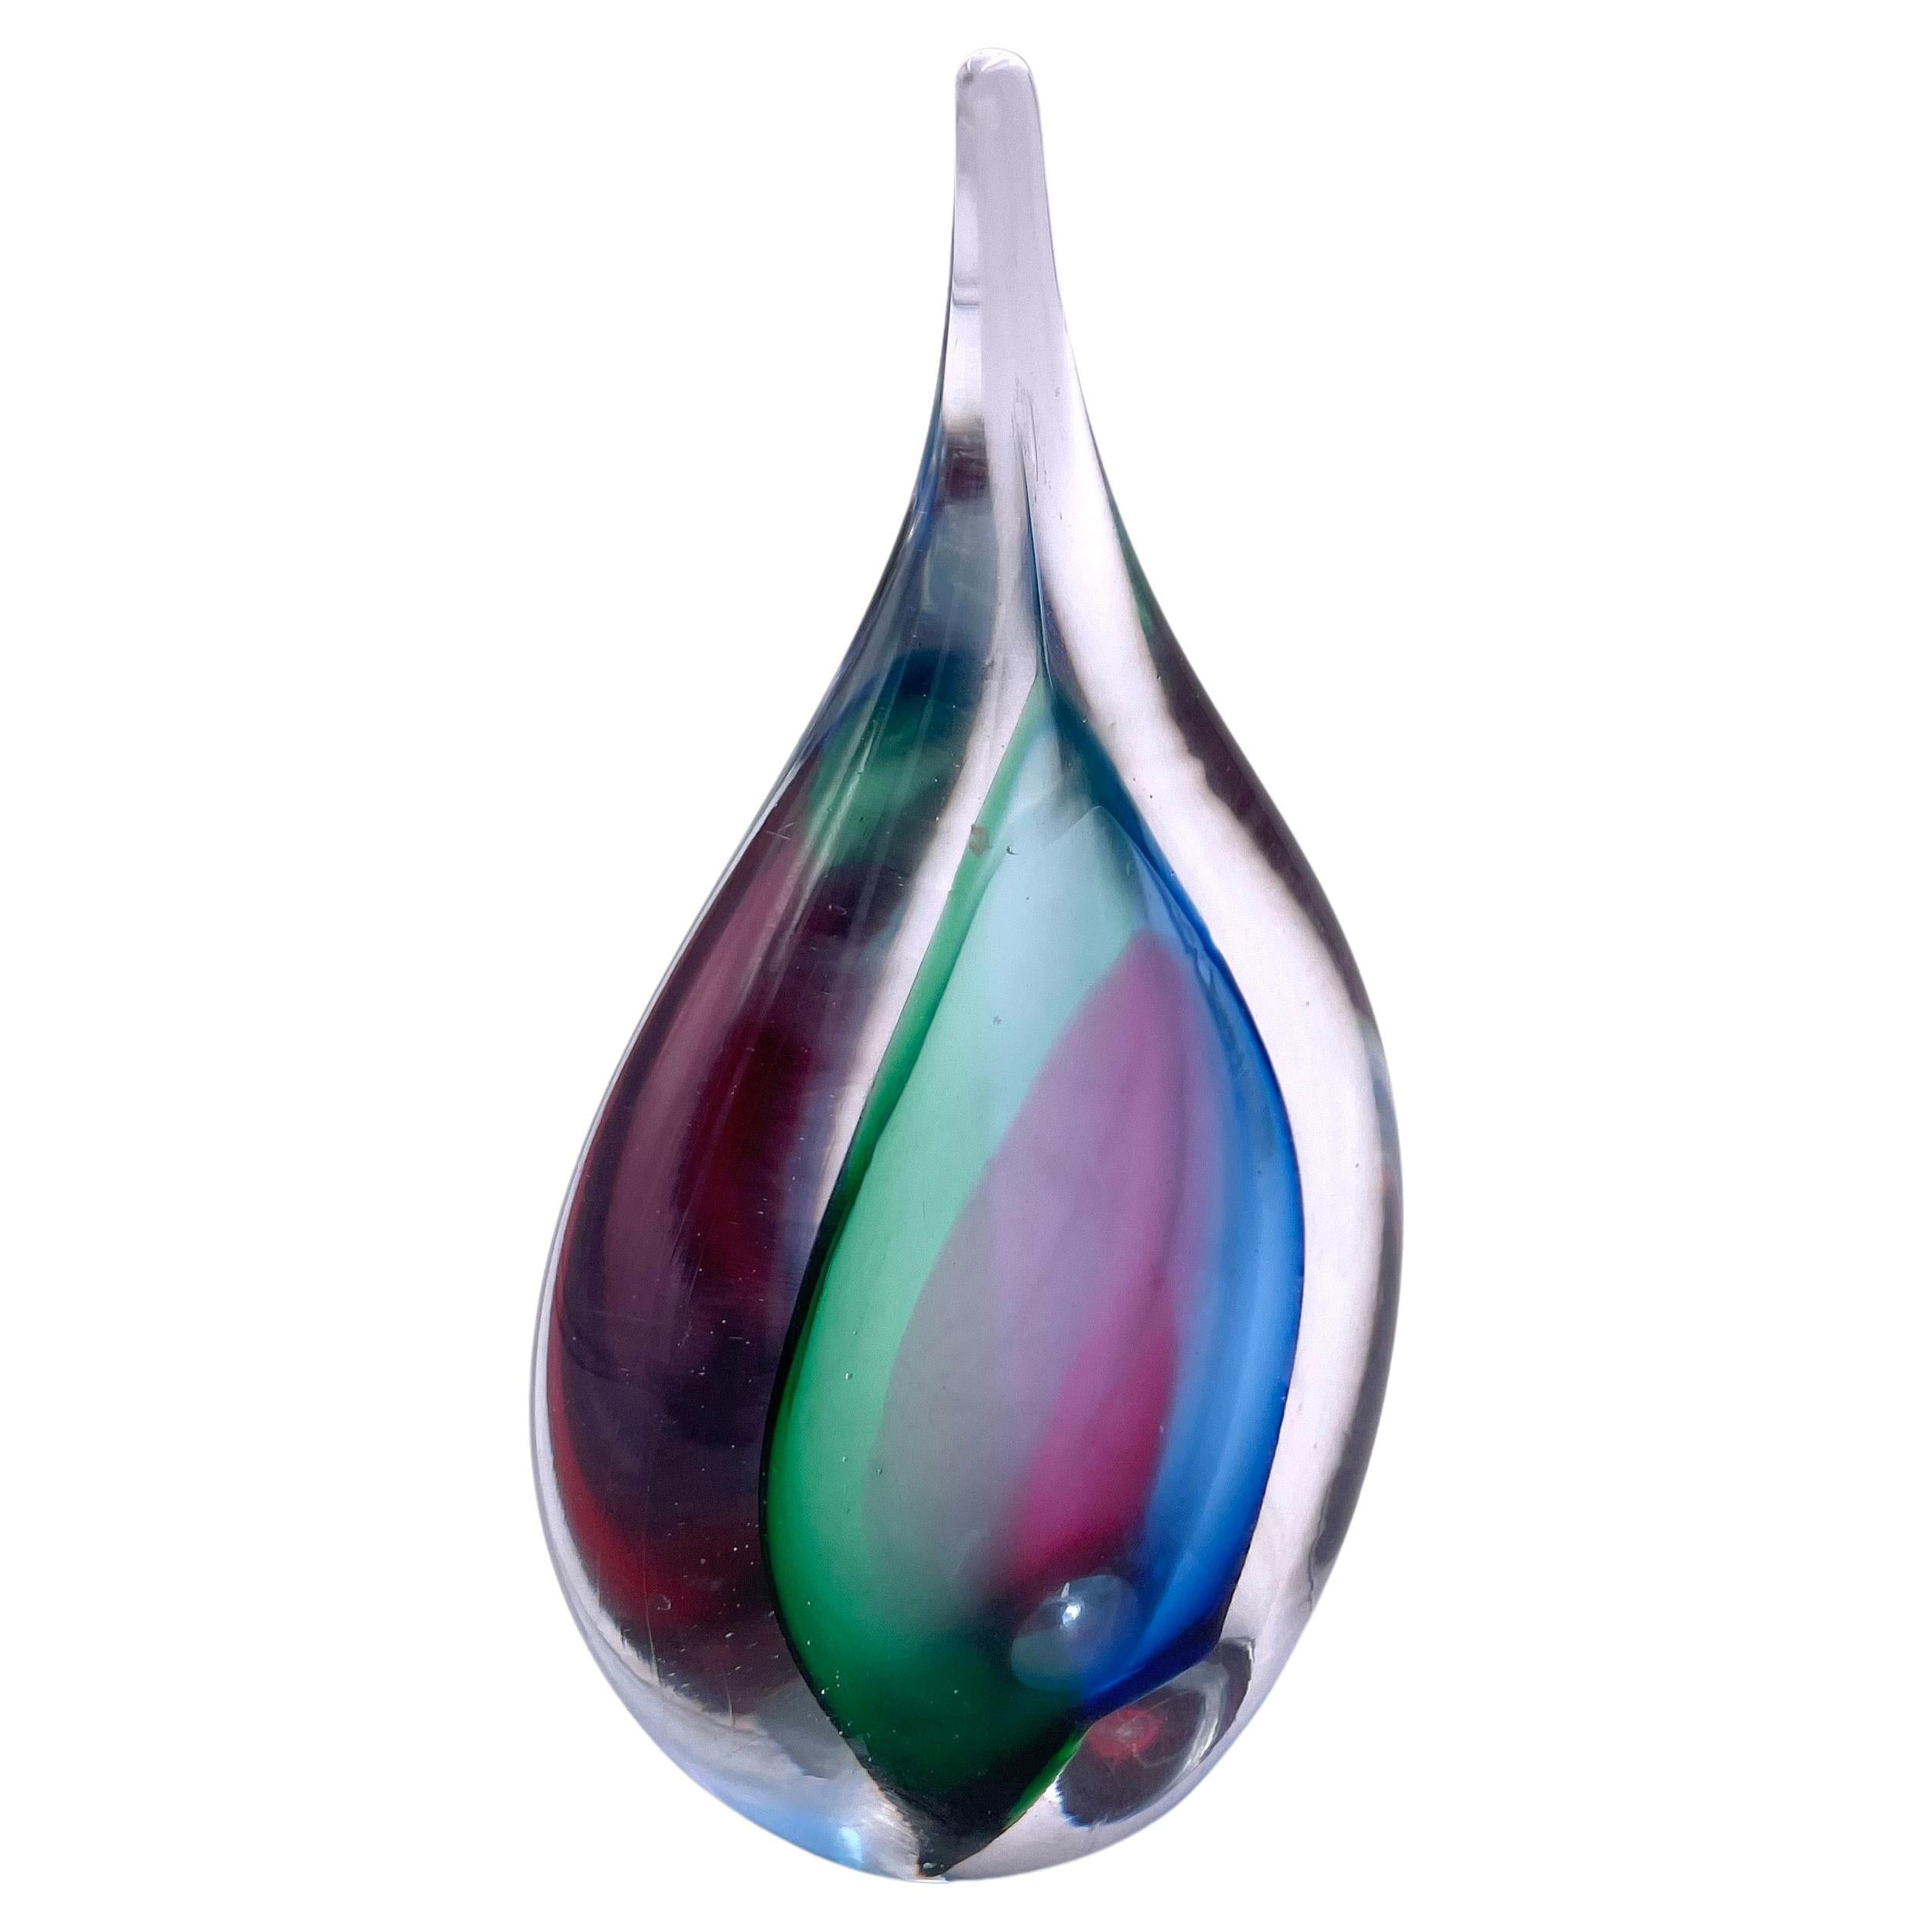 Signed Laurin Canadian studio glassblown vasehandmade glass blown glass vesselhandmade paperweight1993